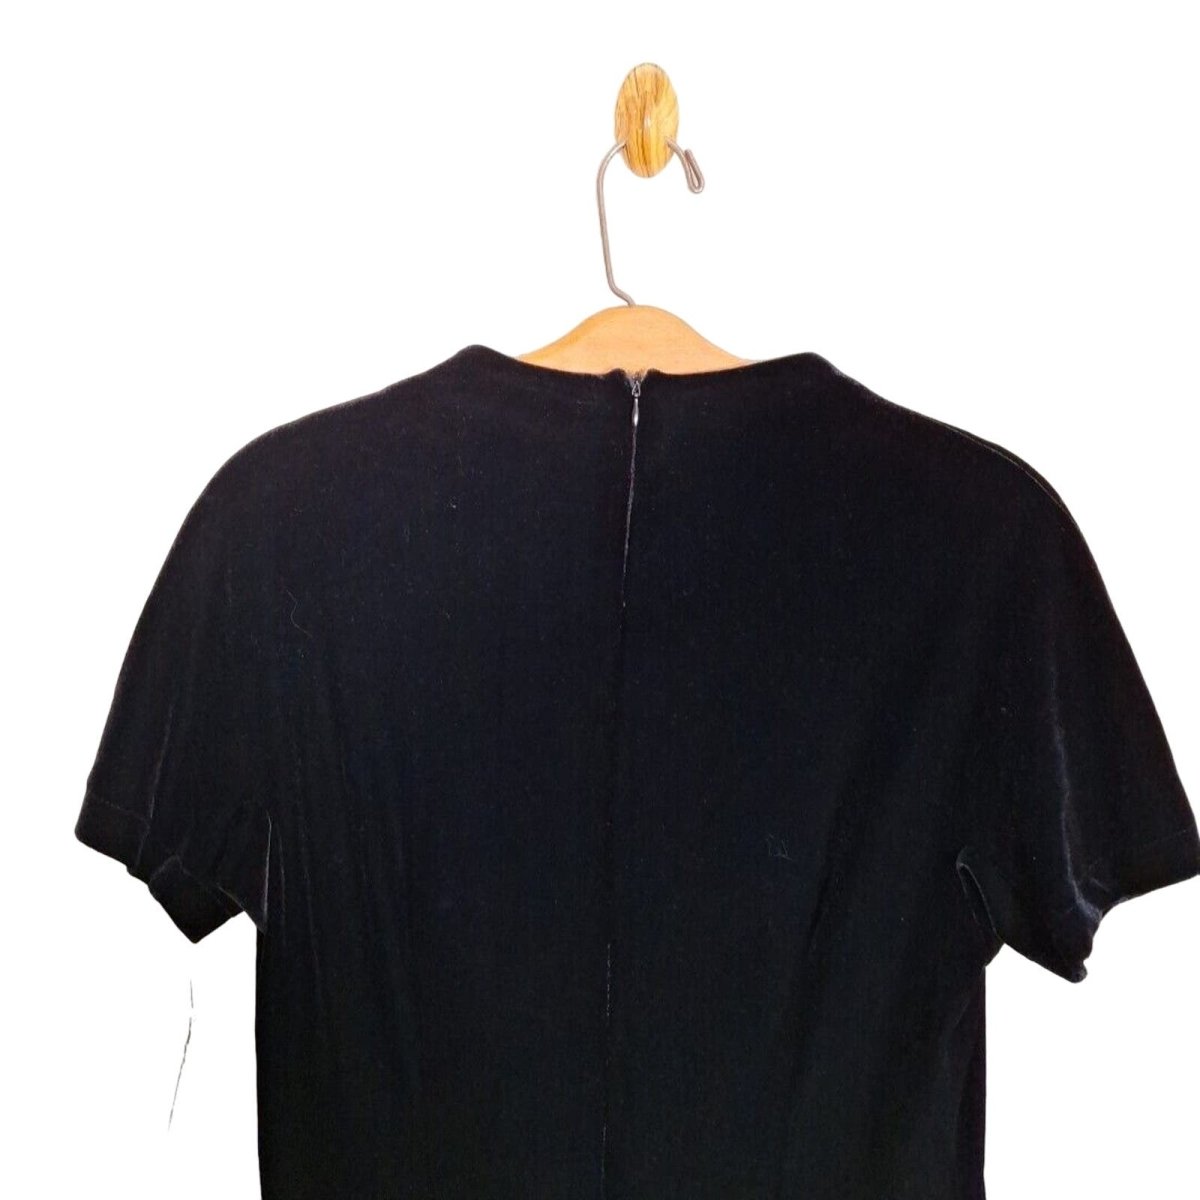 Deadstock 90s Black Velvet Maxi Dress Women Size Medium - themallvintage The Mall Vintage